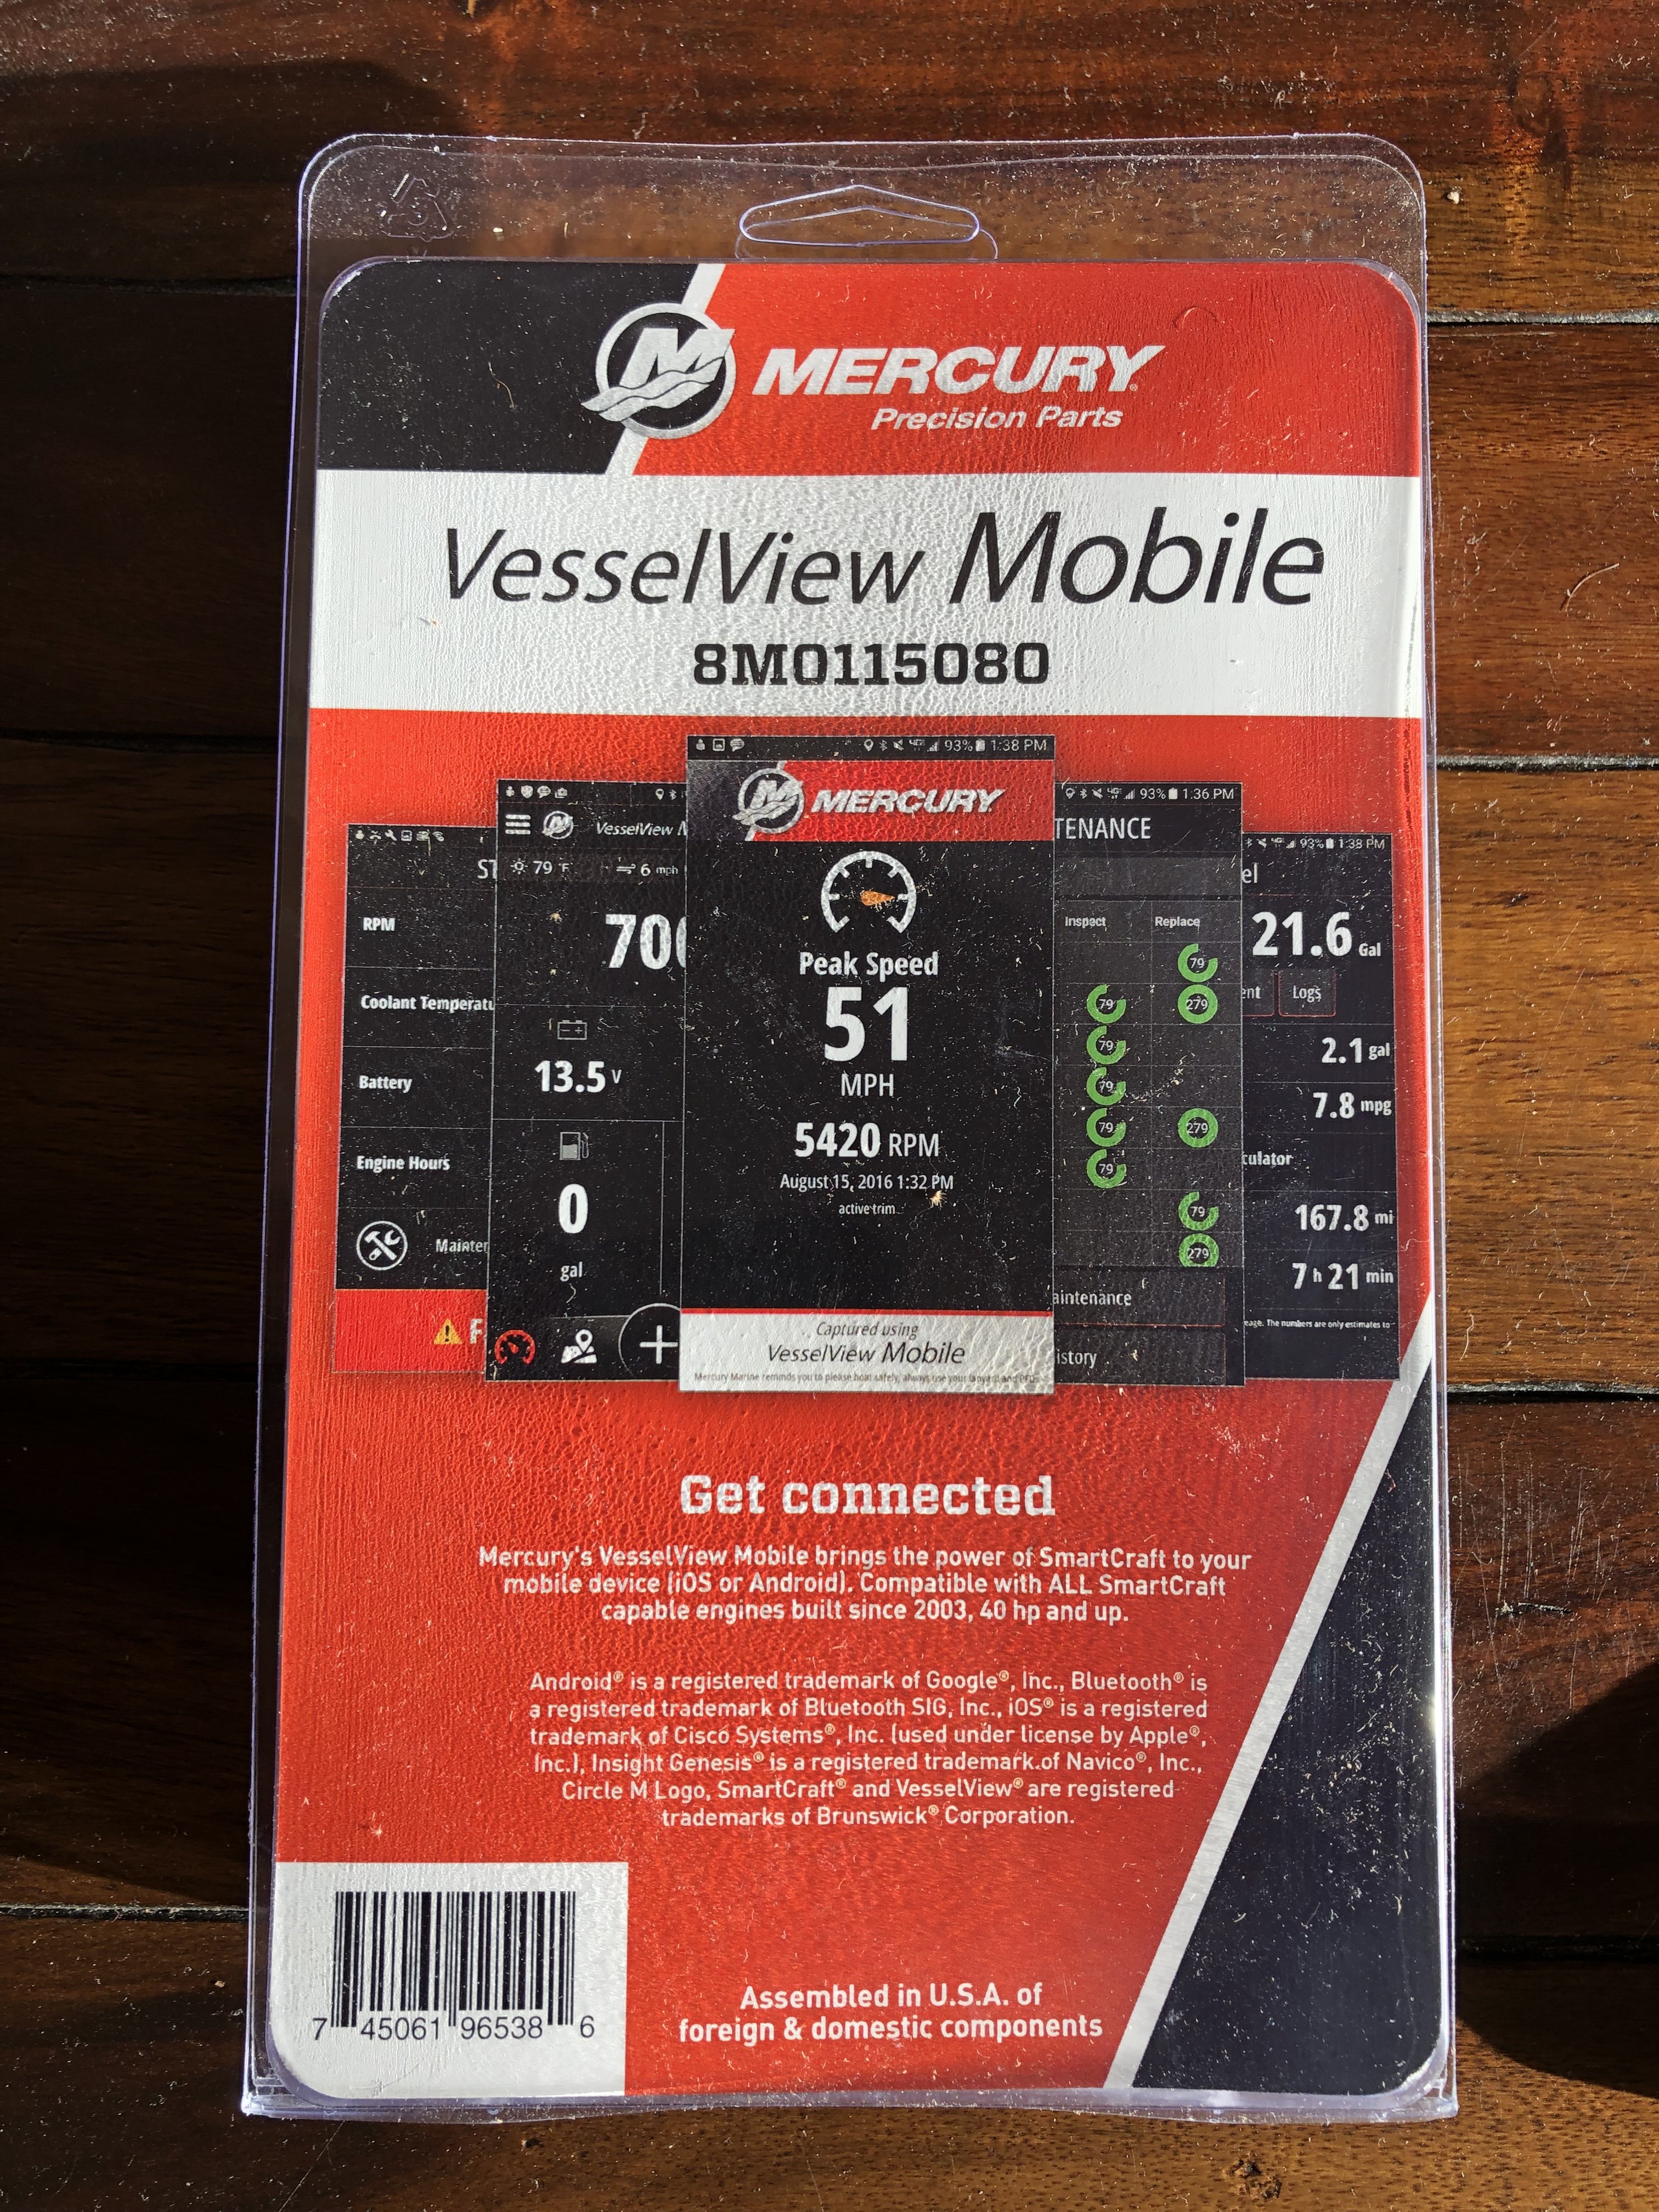 Vesselview mobile showed up!